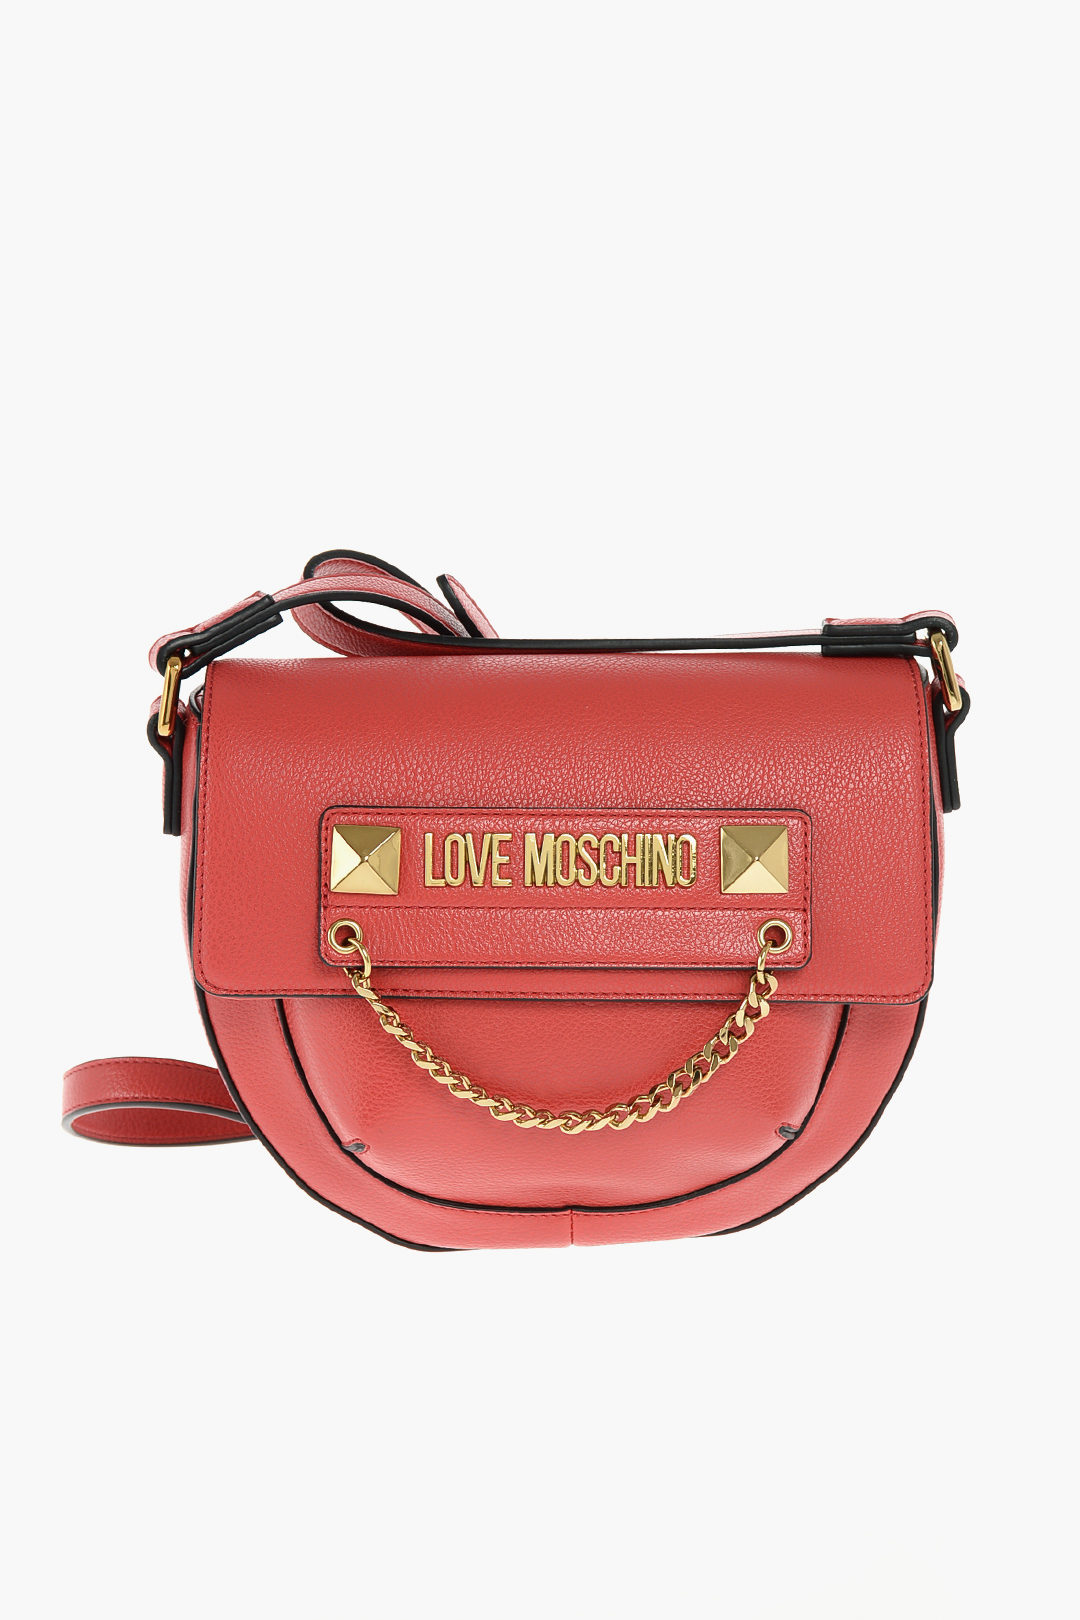 Love Moschino Women's Hobo Bag with Scarf